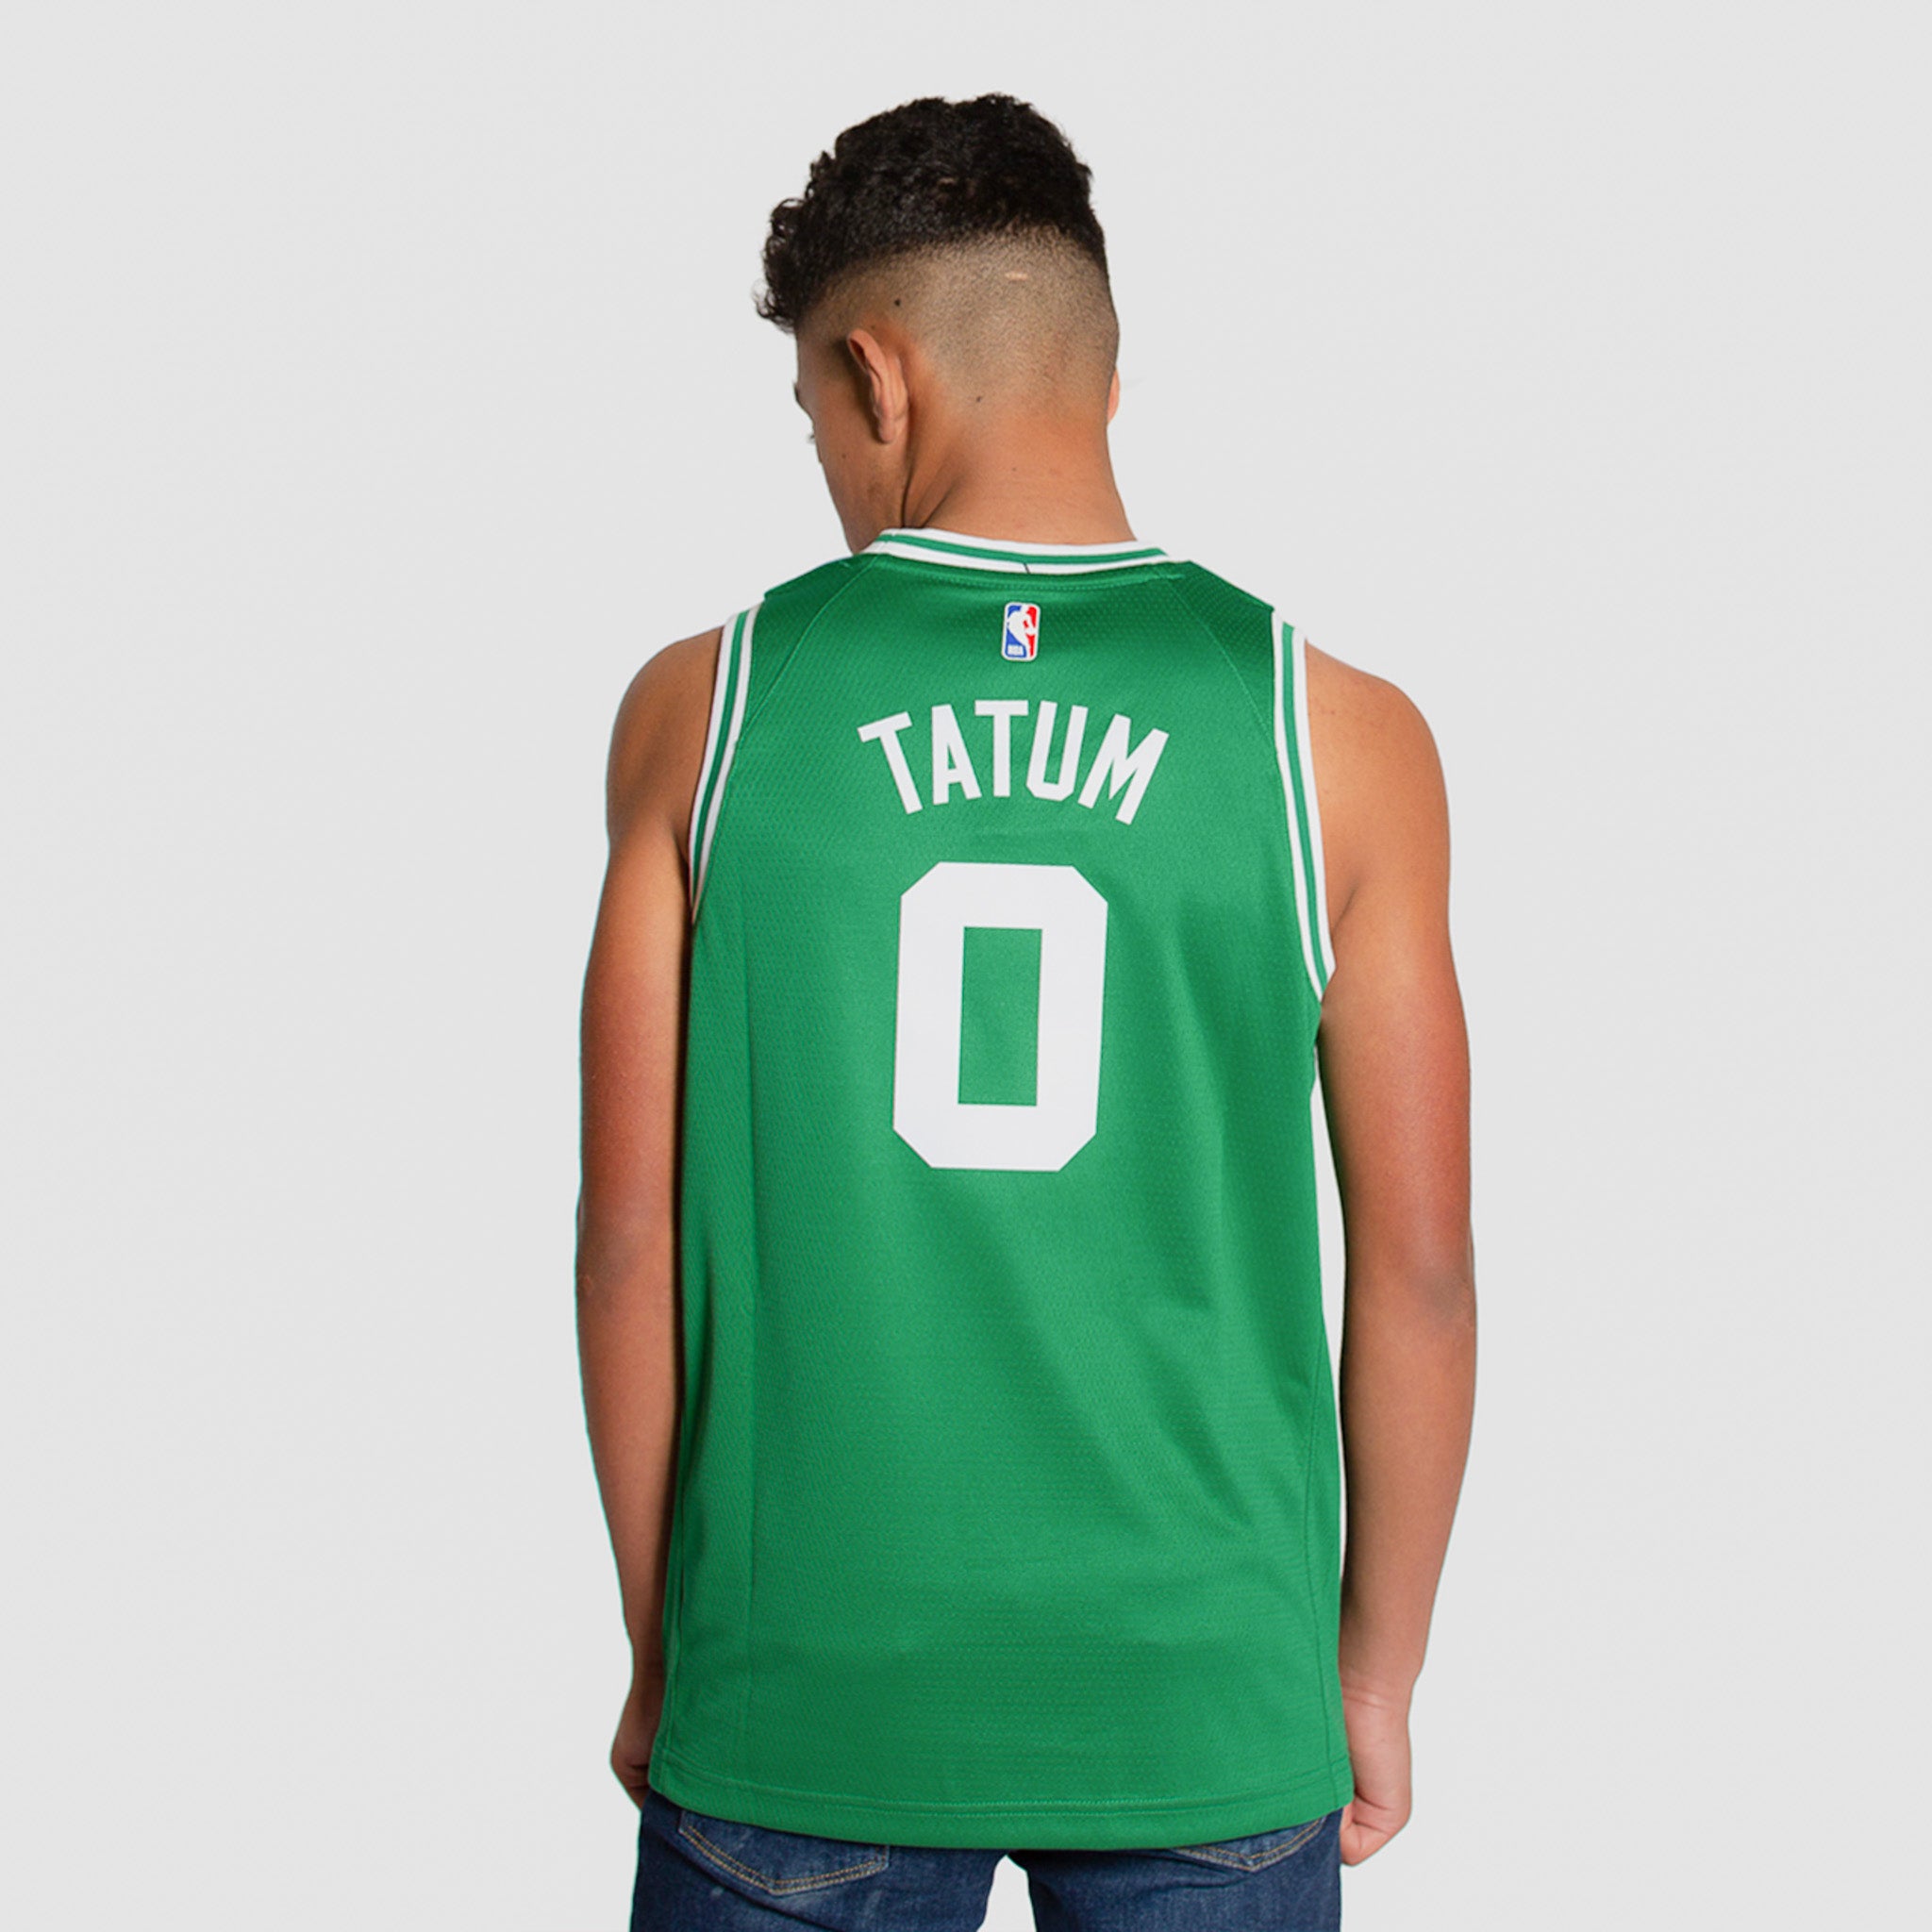 Jayson Tatum Boston Celtics Fast Break Youth Jersey